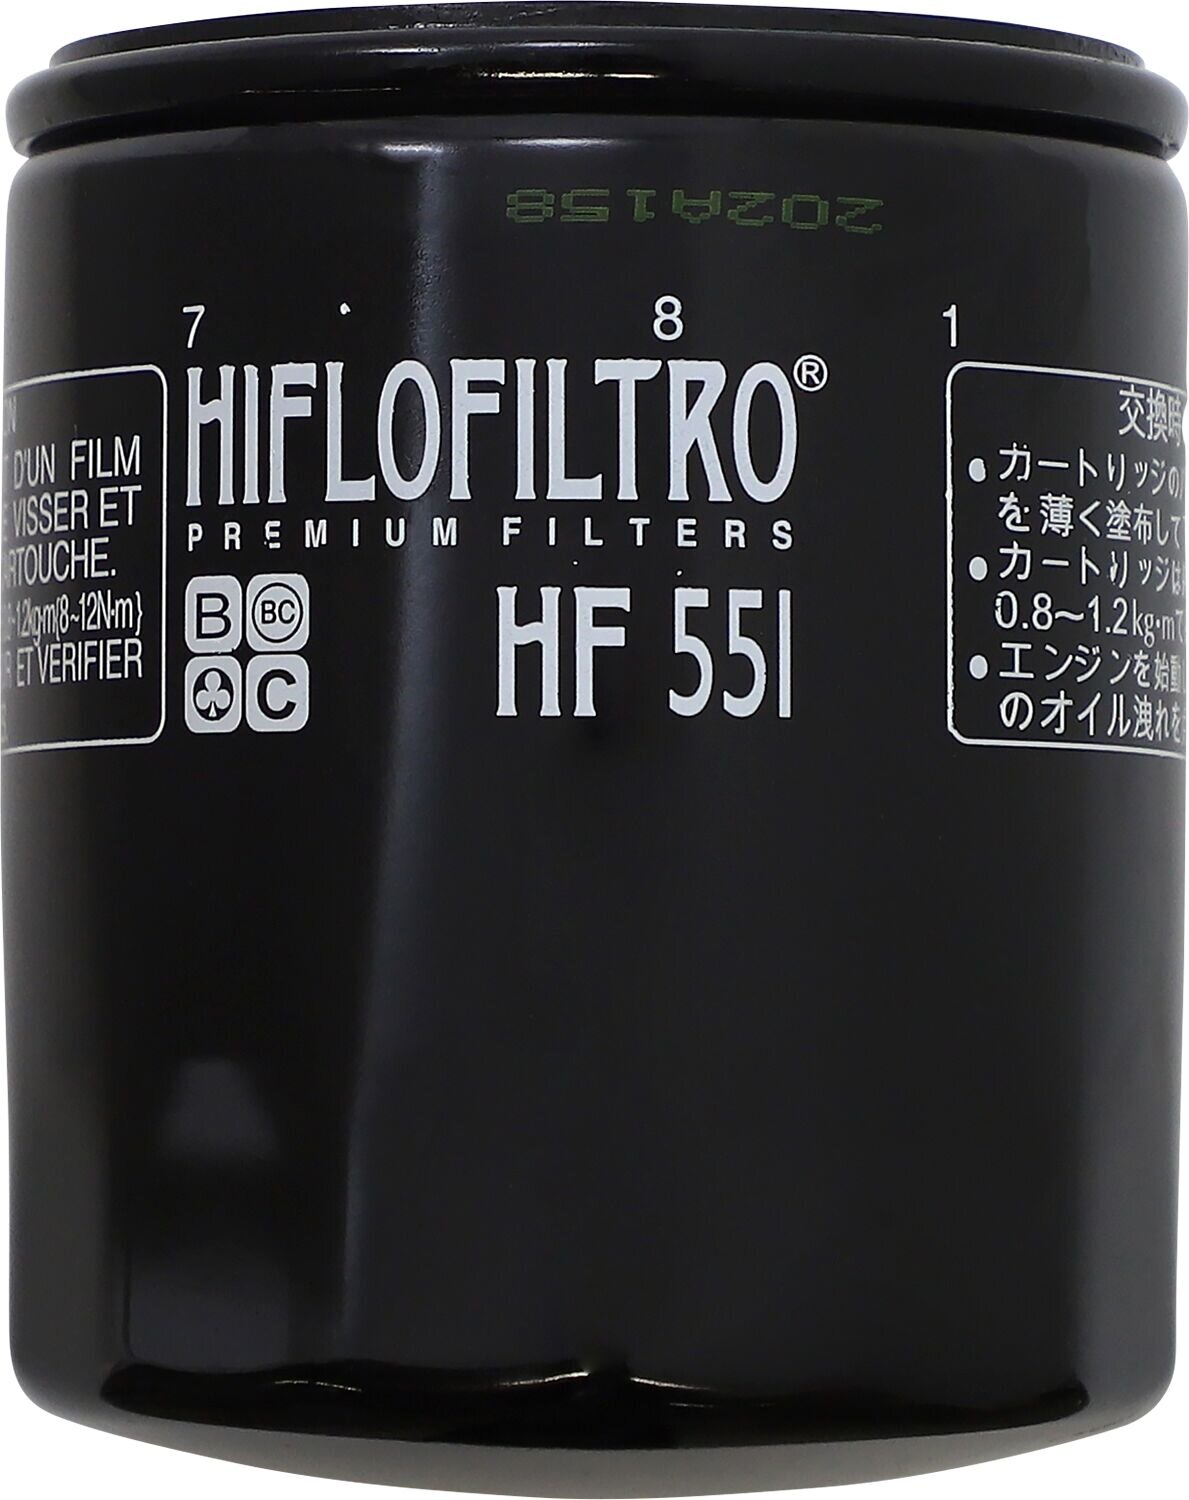 Fltr Oil Moto Guzzi Hf551